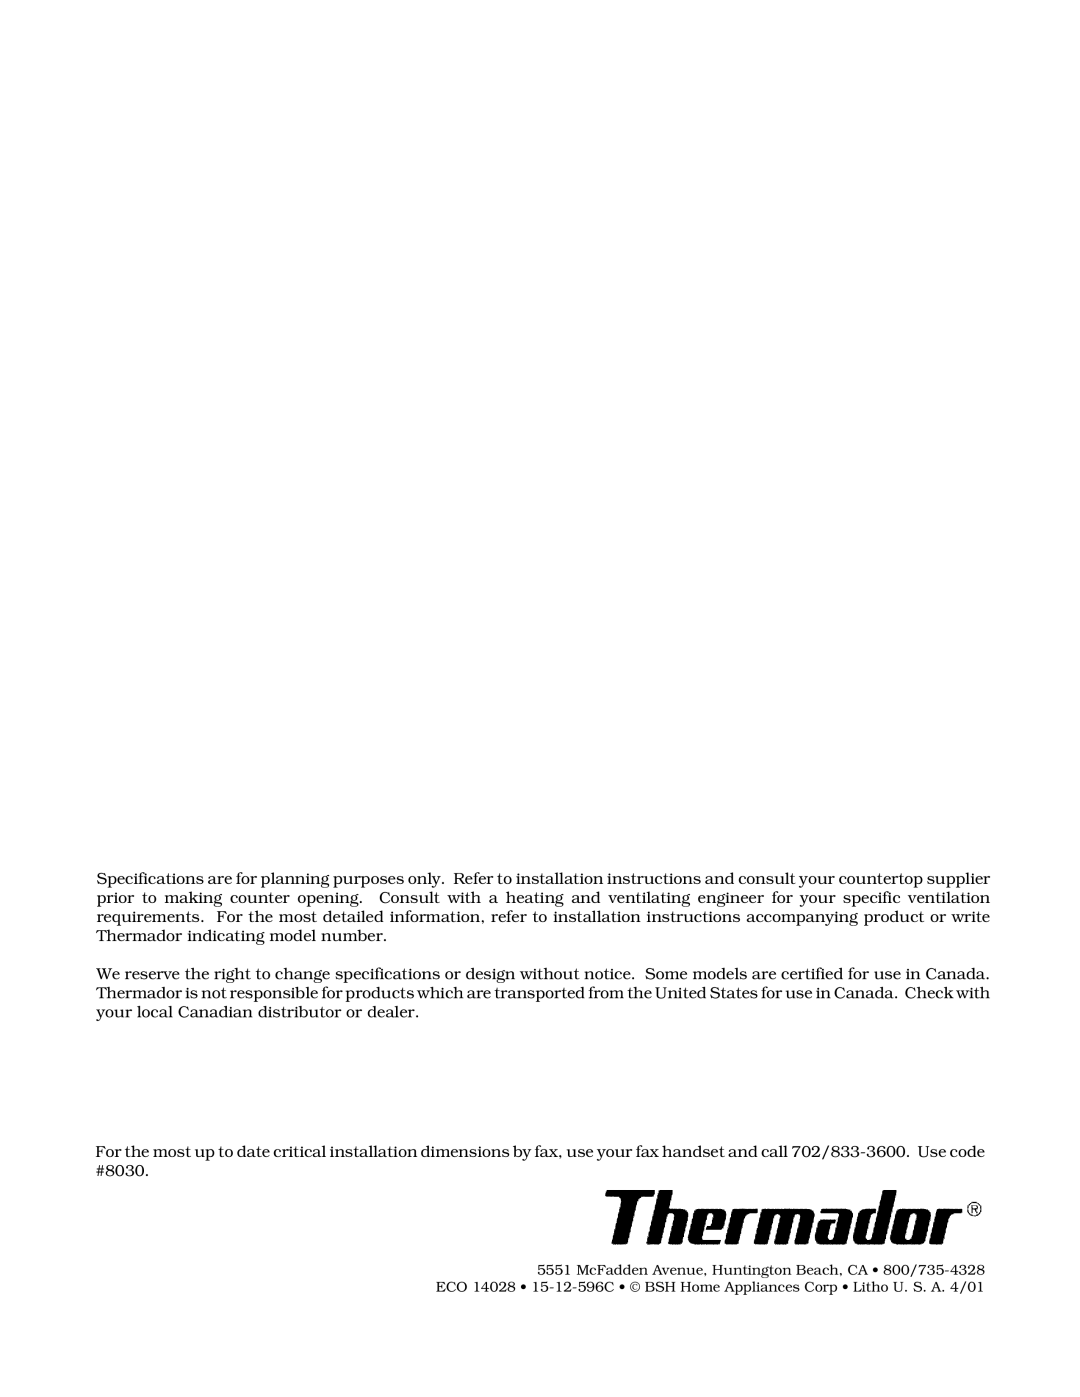 Thermador PRG48, PRG304, PRDS48, PRG36 installation instructions 